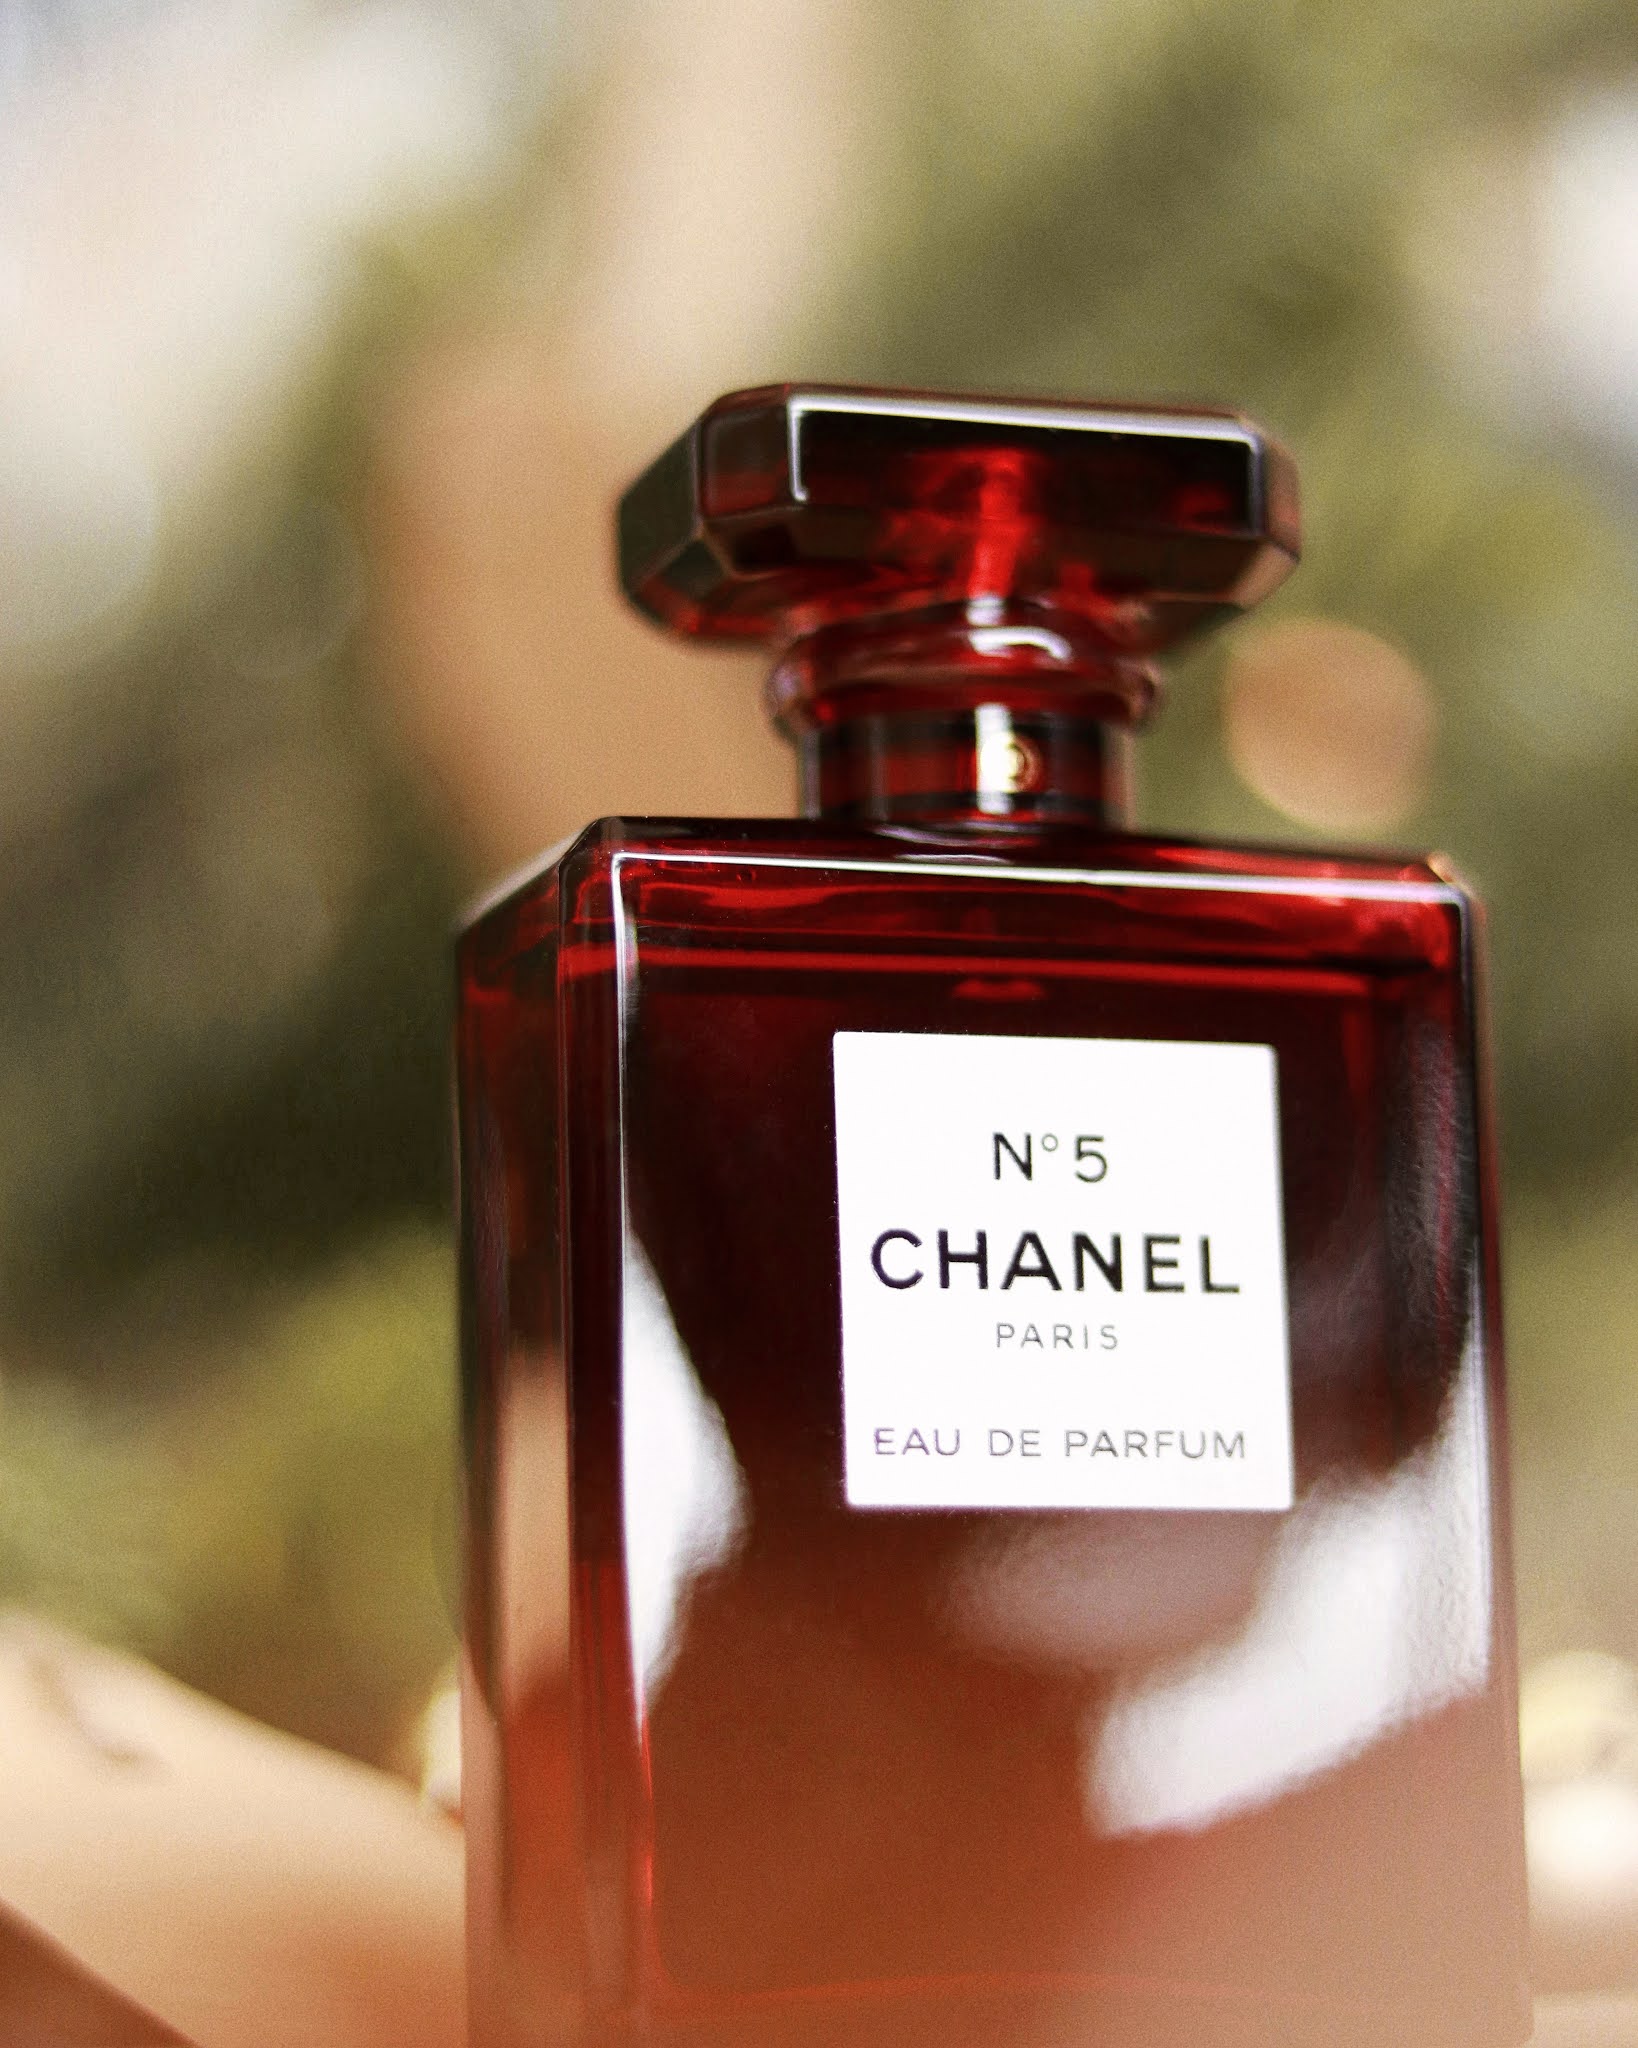 CHANEL N°5 LIMITED EDITION Perfume Review - CHANEL No5 Eau De Parfum  Fragrance 